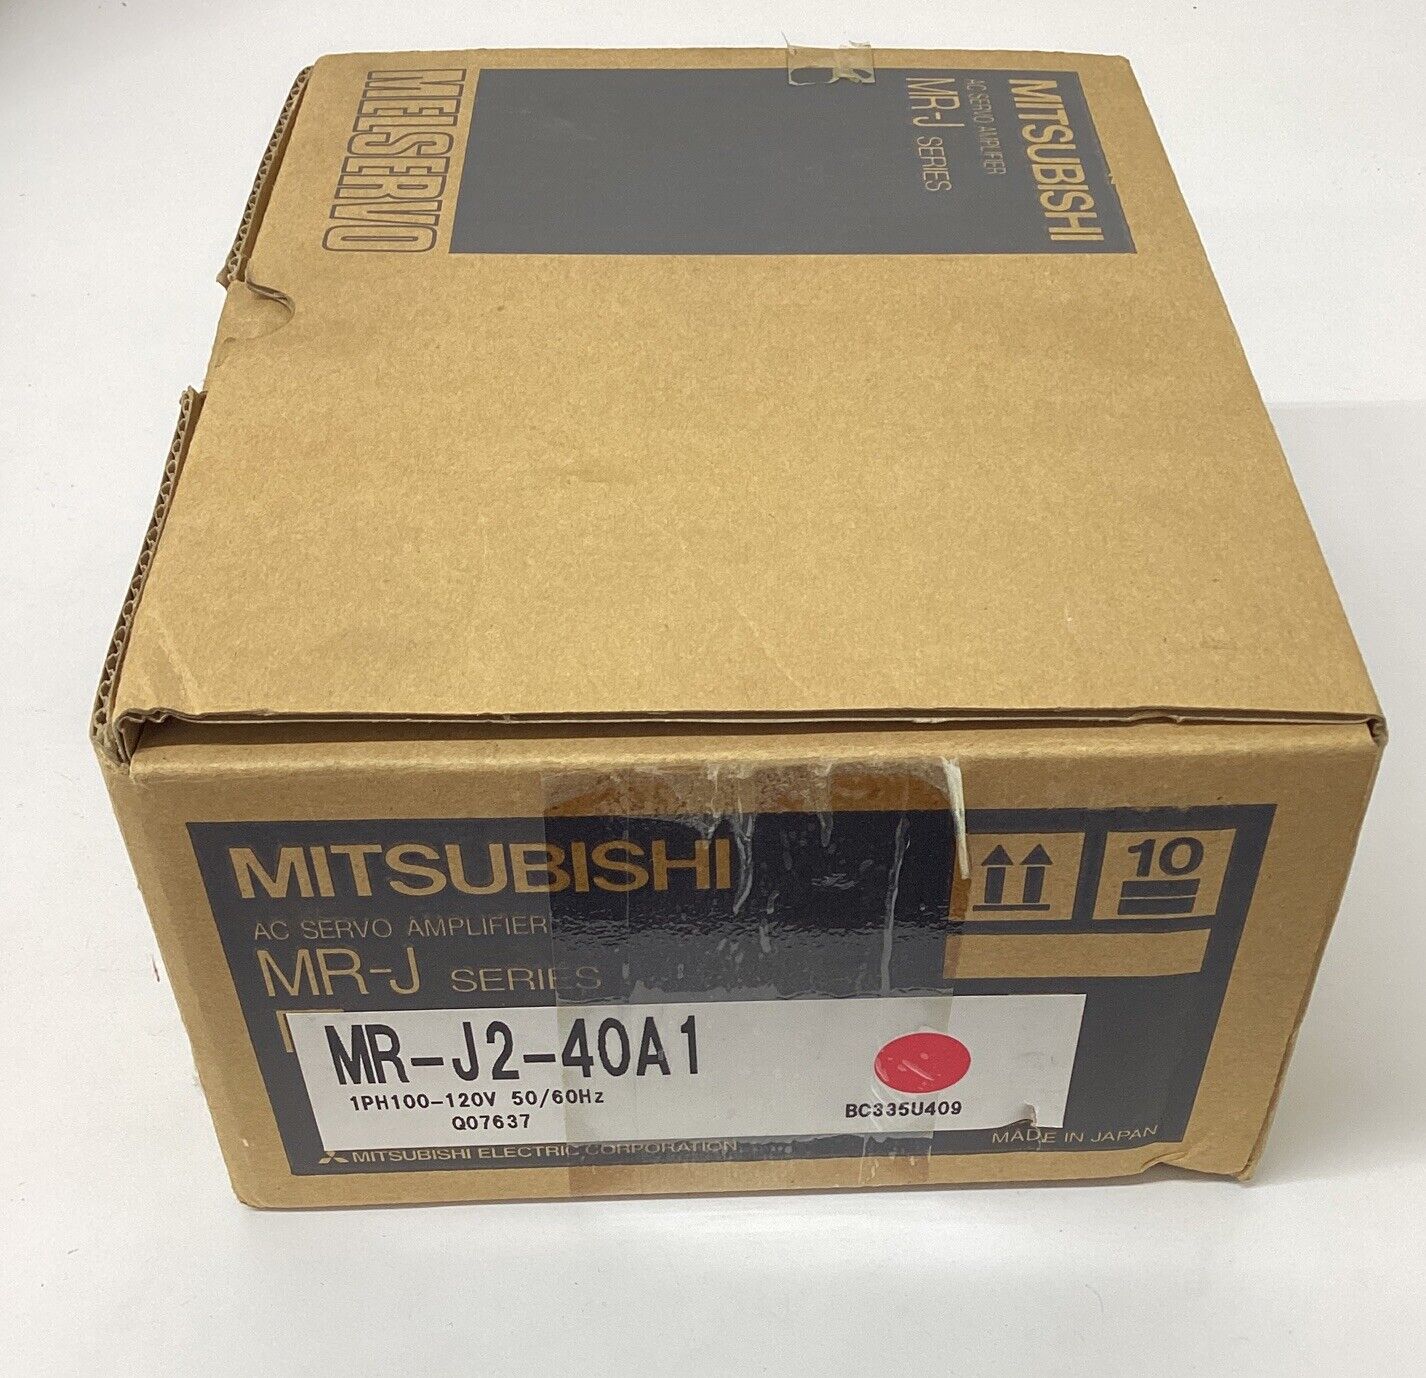 Mitsubishi MR-J2-40A1 400W, 1PH 100-120V AC Servo Drive (SH107)